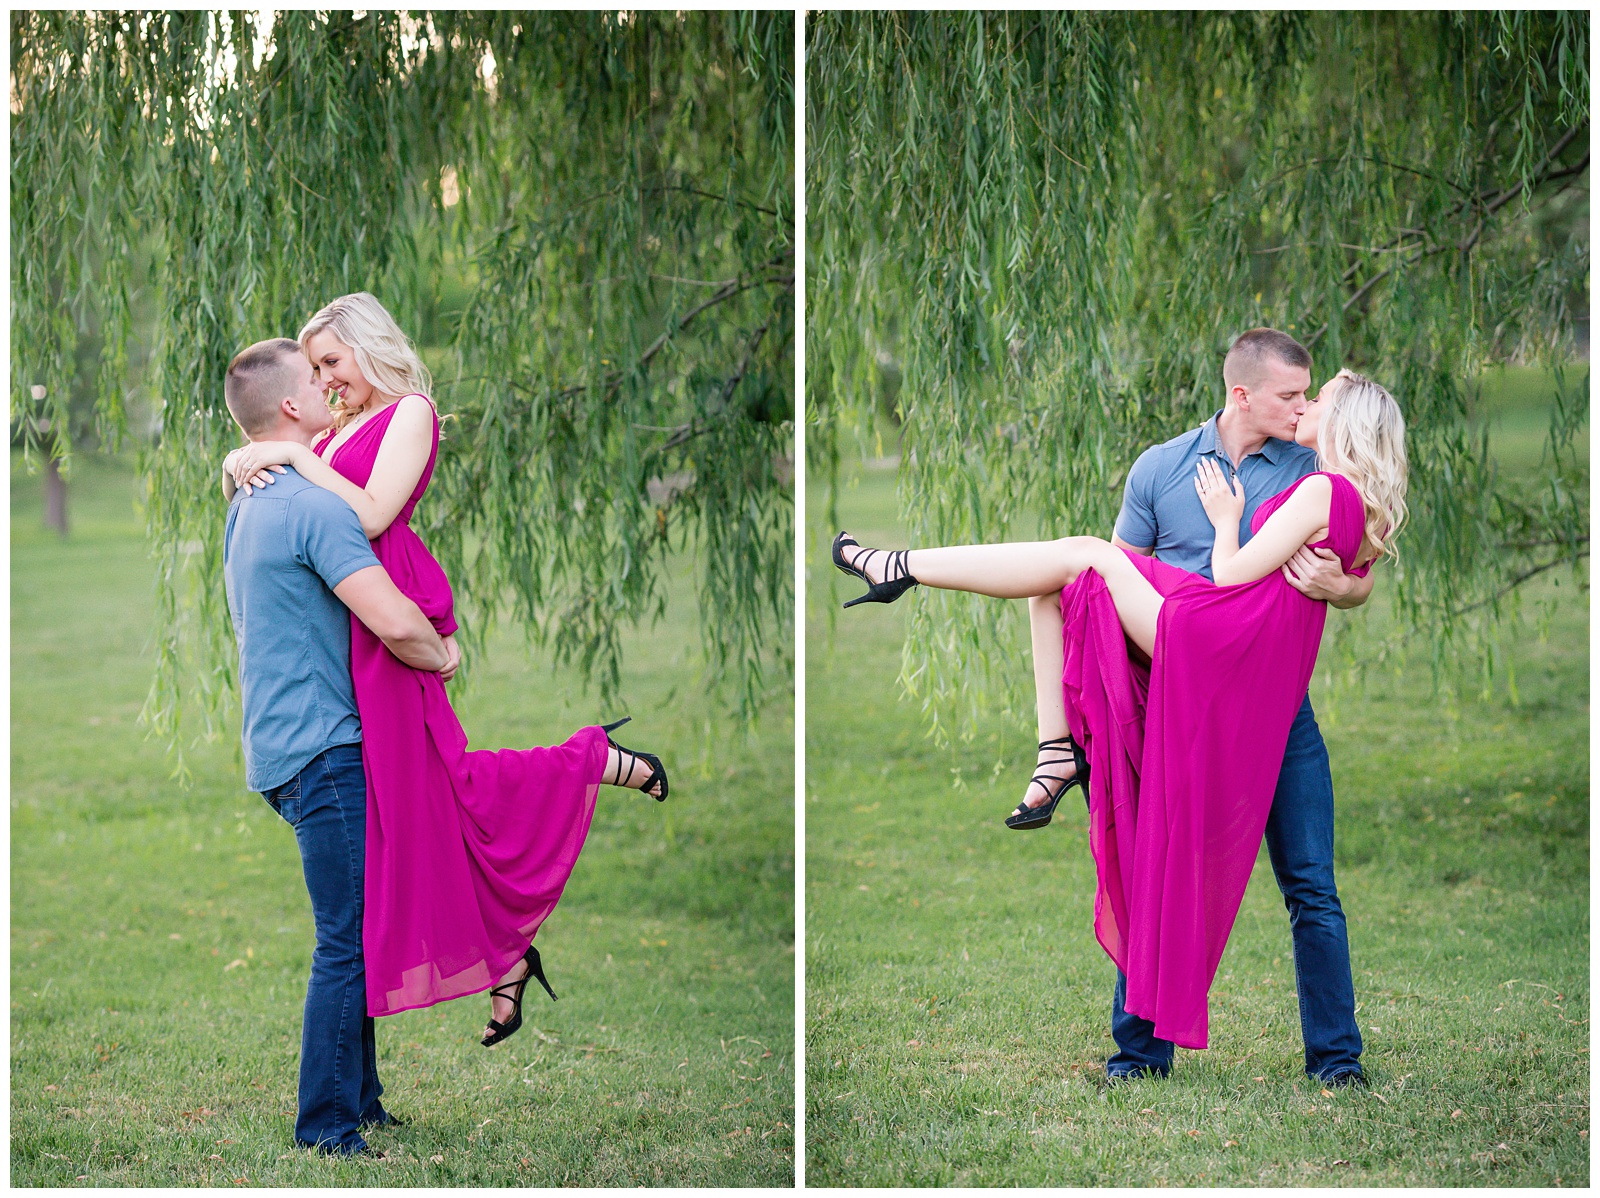 Engagement photography in Loose Park by Kansas City wedding photographers Wisdom-Watson Weddings.